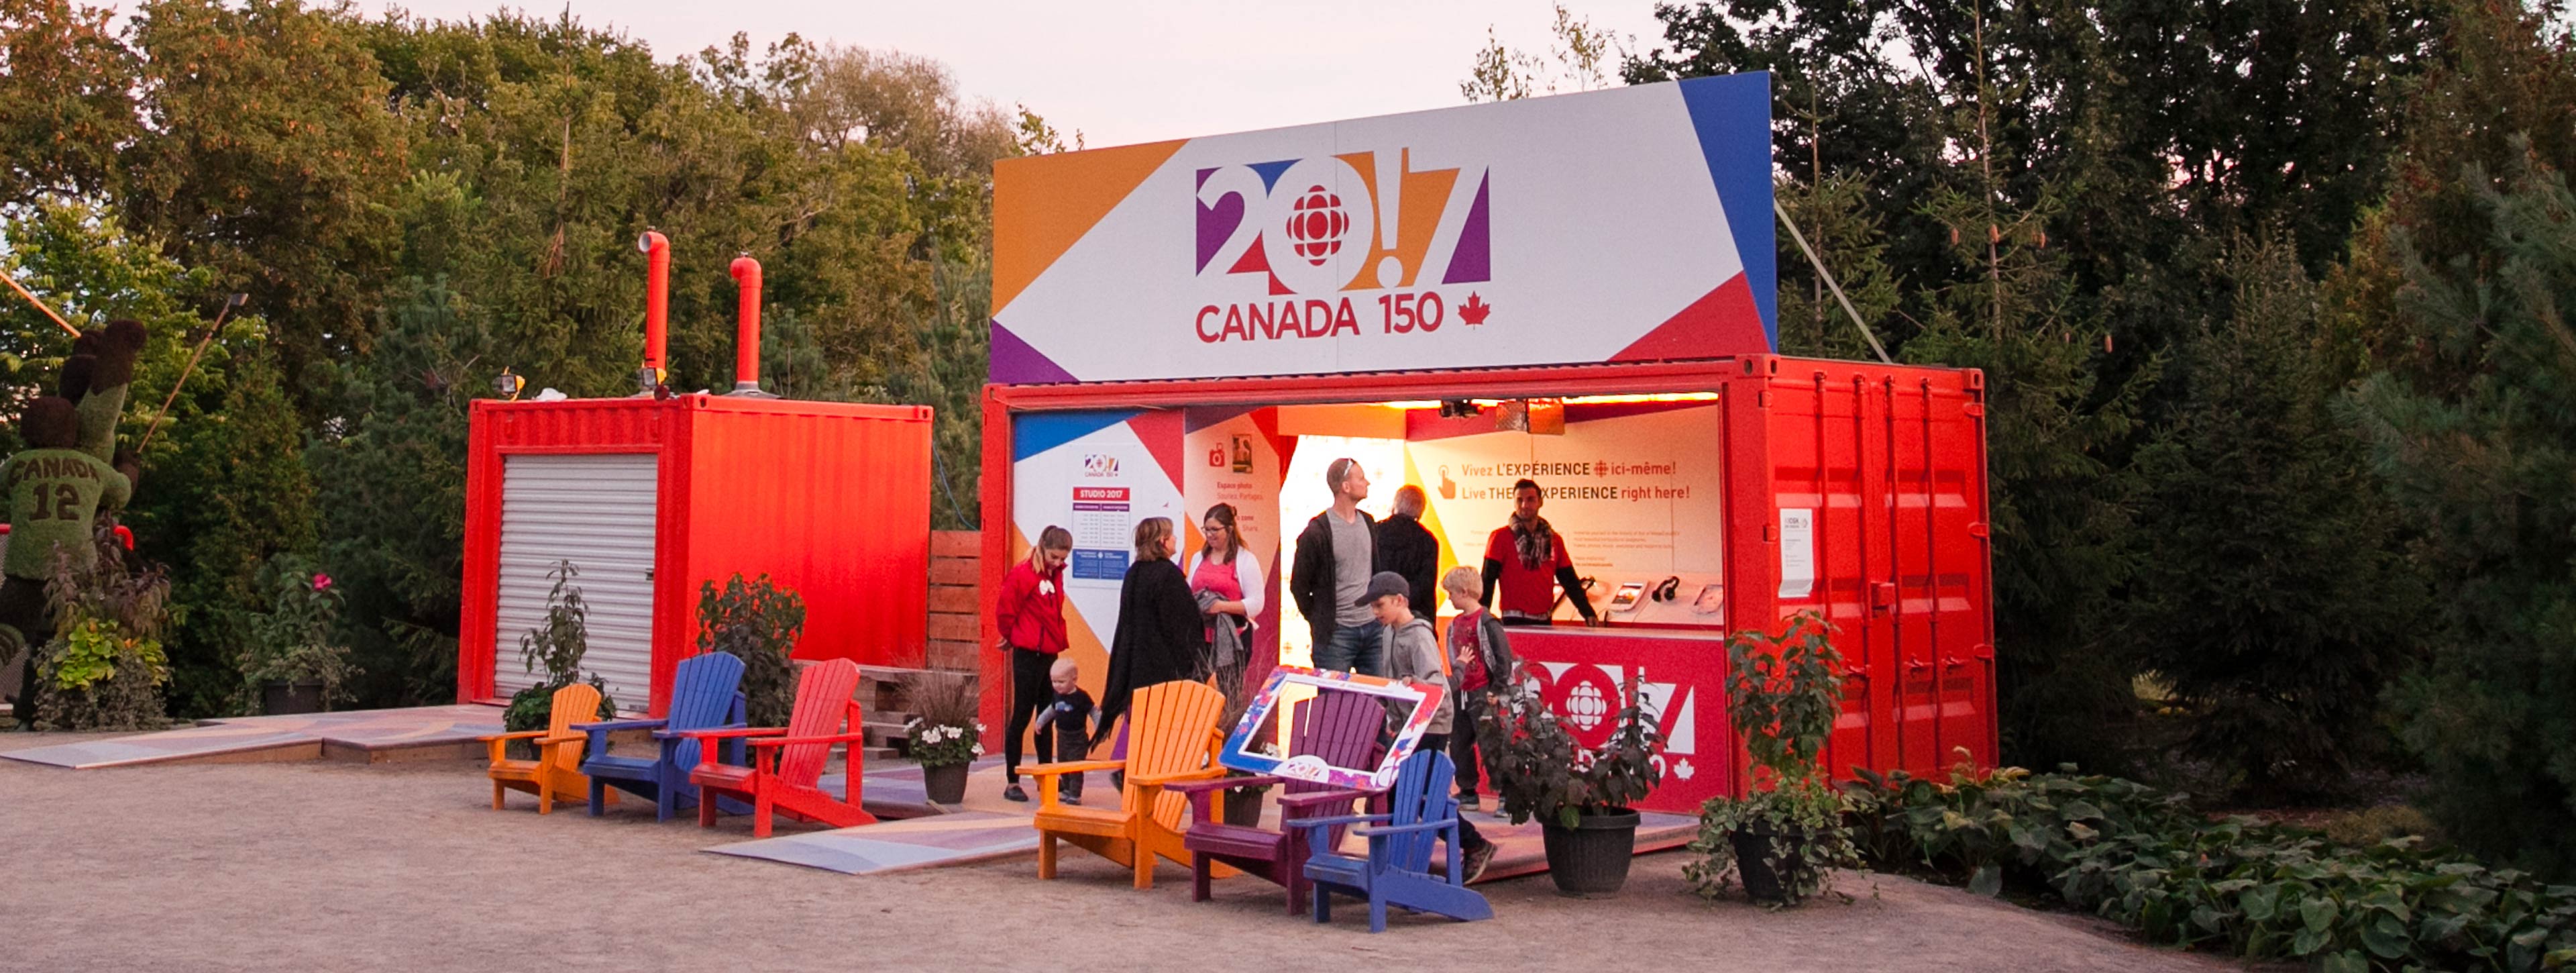 CBC/Radio-Canada's 2017 booth at MosaiCanada in Gatineau, QC.